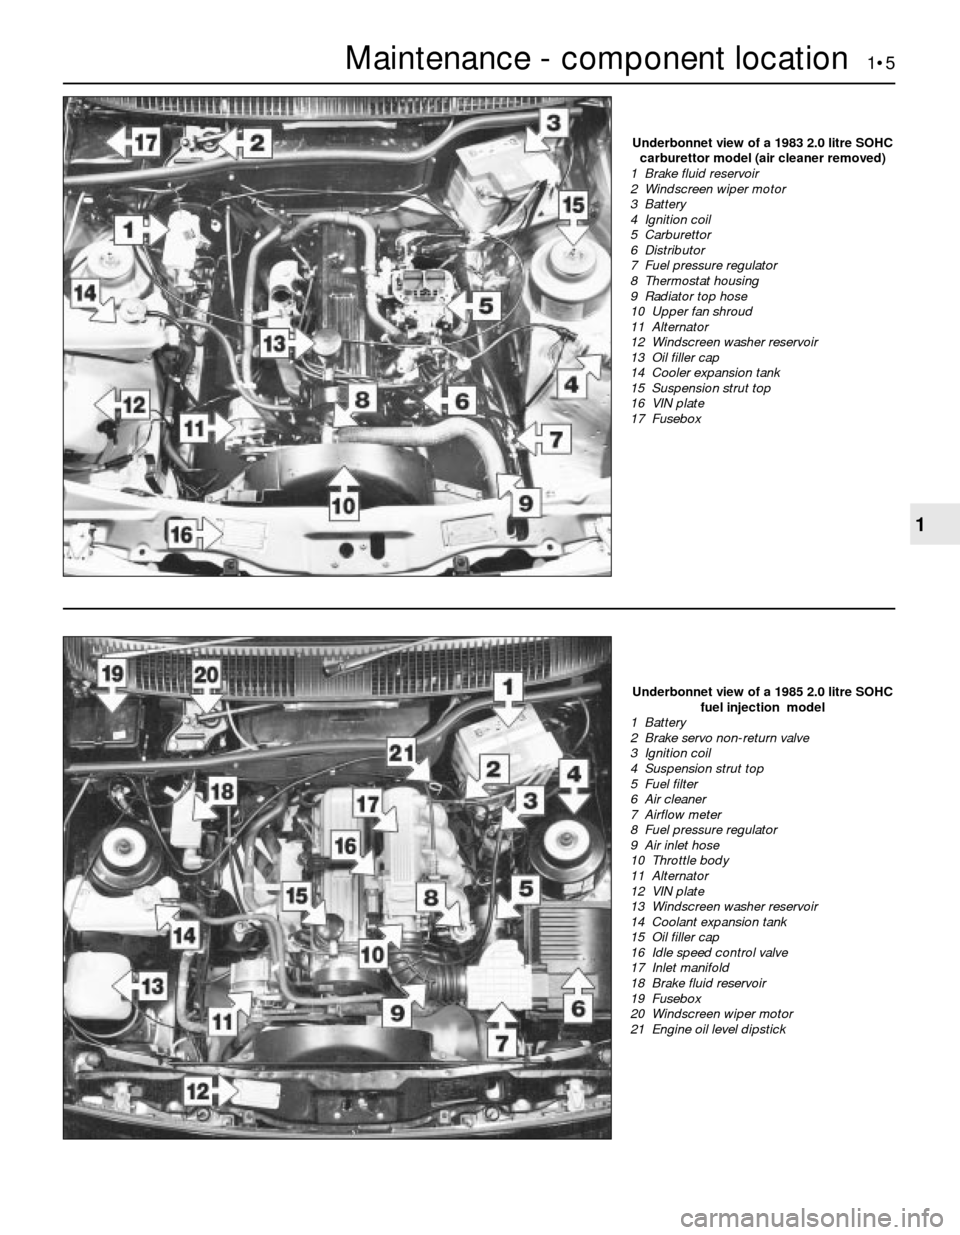 FORD SIERRA 1988 2.G Routine Manintenance And Servicing Workshop Manual Maintenance - component location  1•5
1
Underbonnet view of a 1985 2.0 litre SOHC
fuel injection  model
1  Battery
2  Brake servo non-return valve
3  Ignition coil
4  Suspension strut top
5  Fuel fi